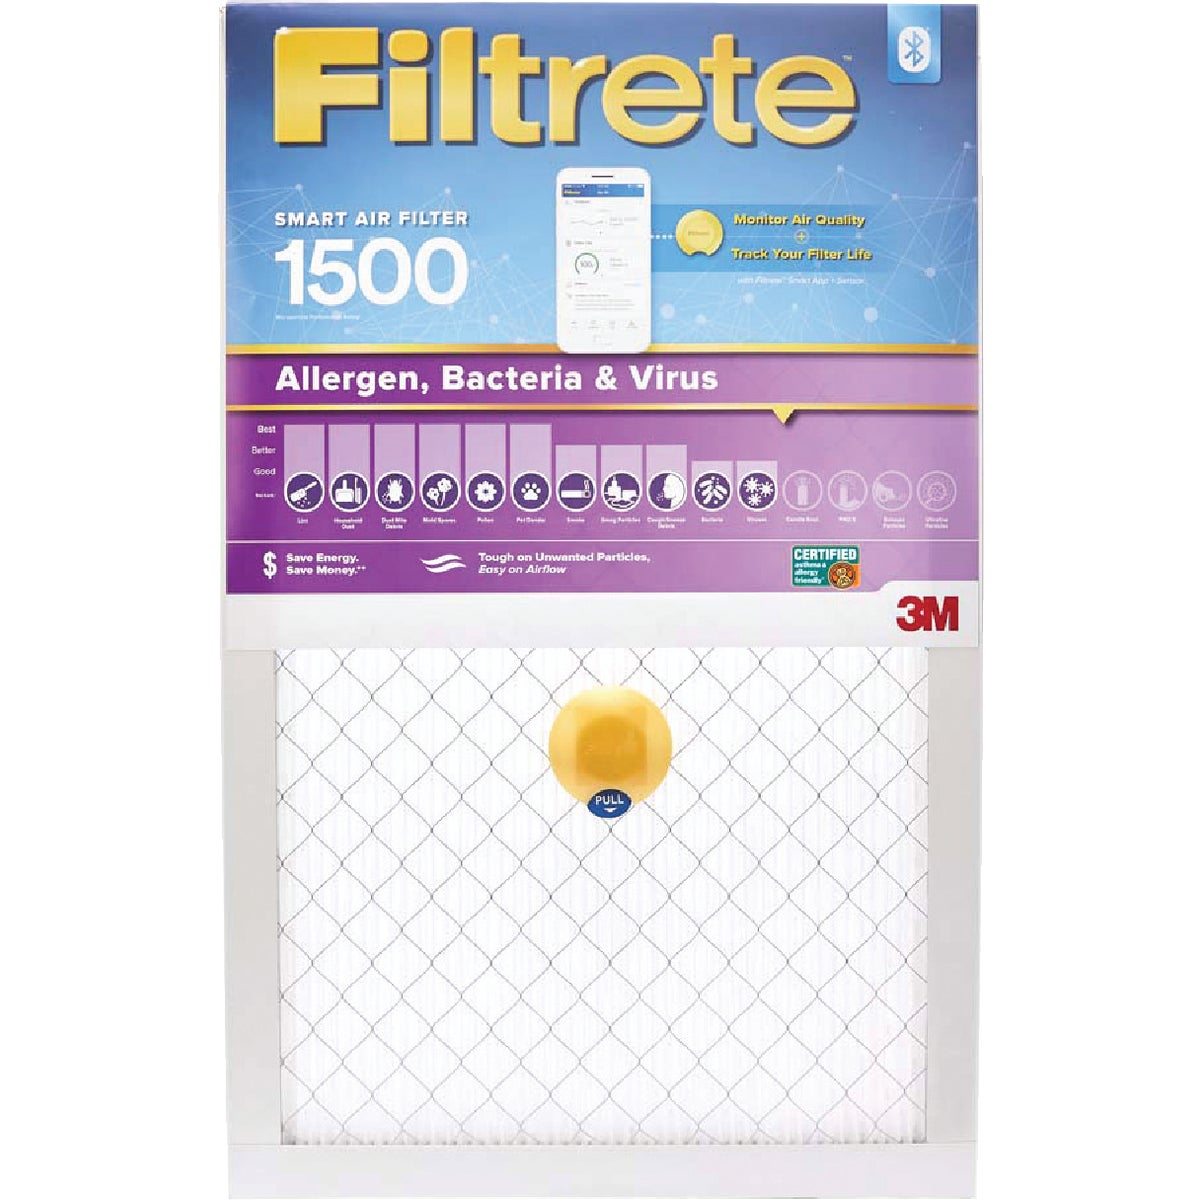 Filtrete 20 In. x 25 In. x 1 In. 1500 MPR Allergen, Bacteria & Virus Smart Furnace Filter